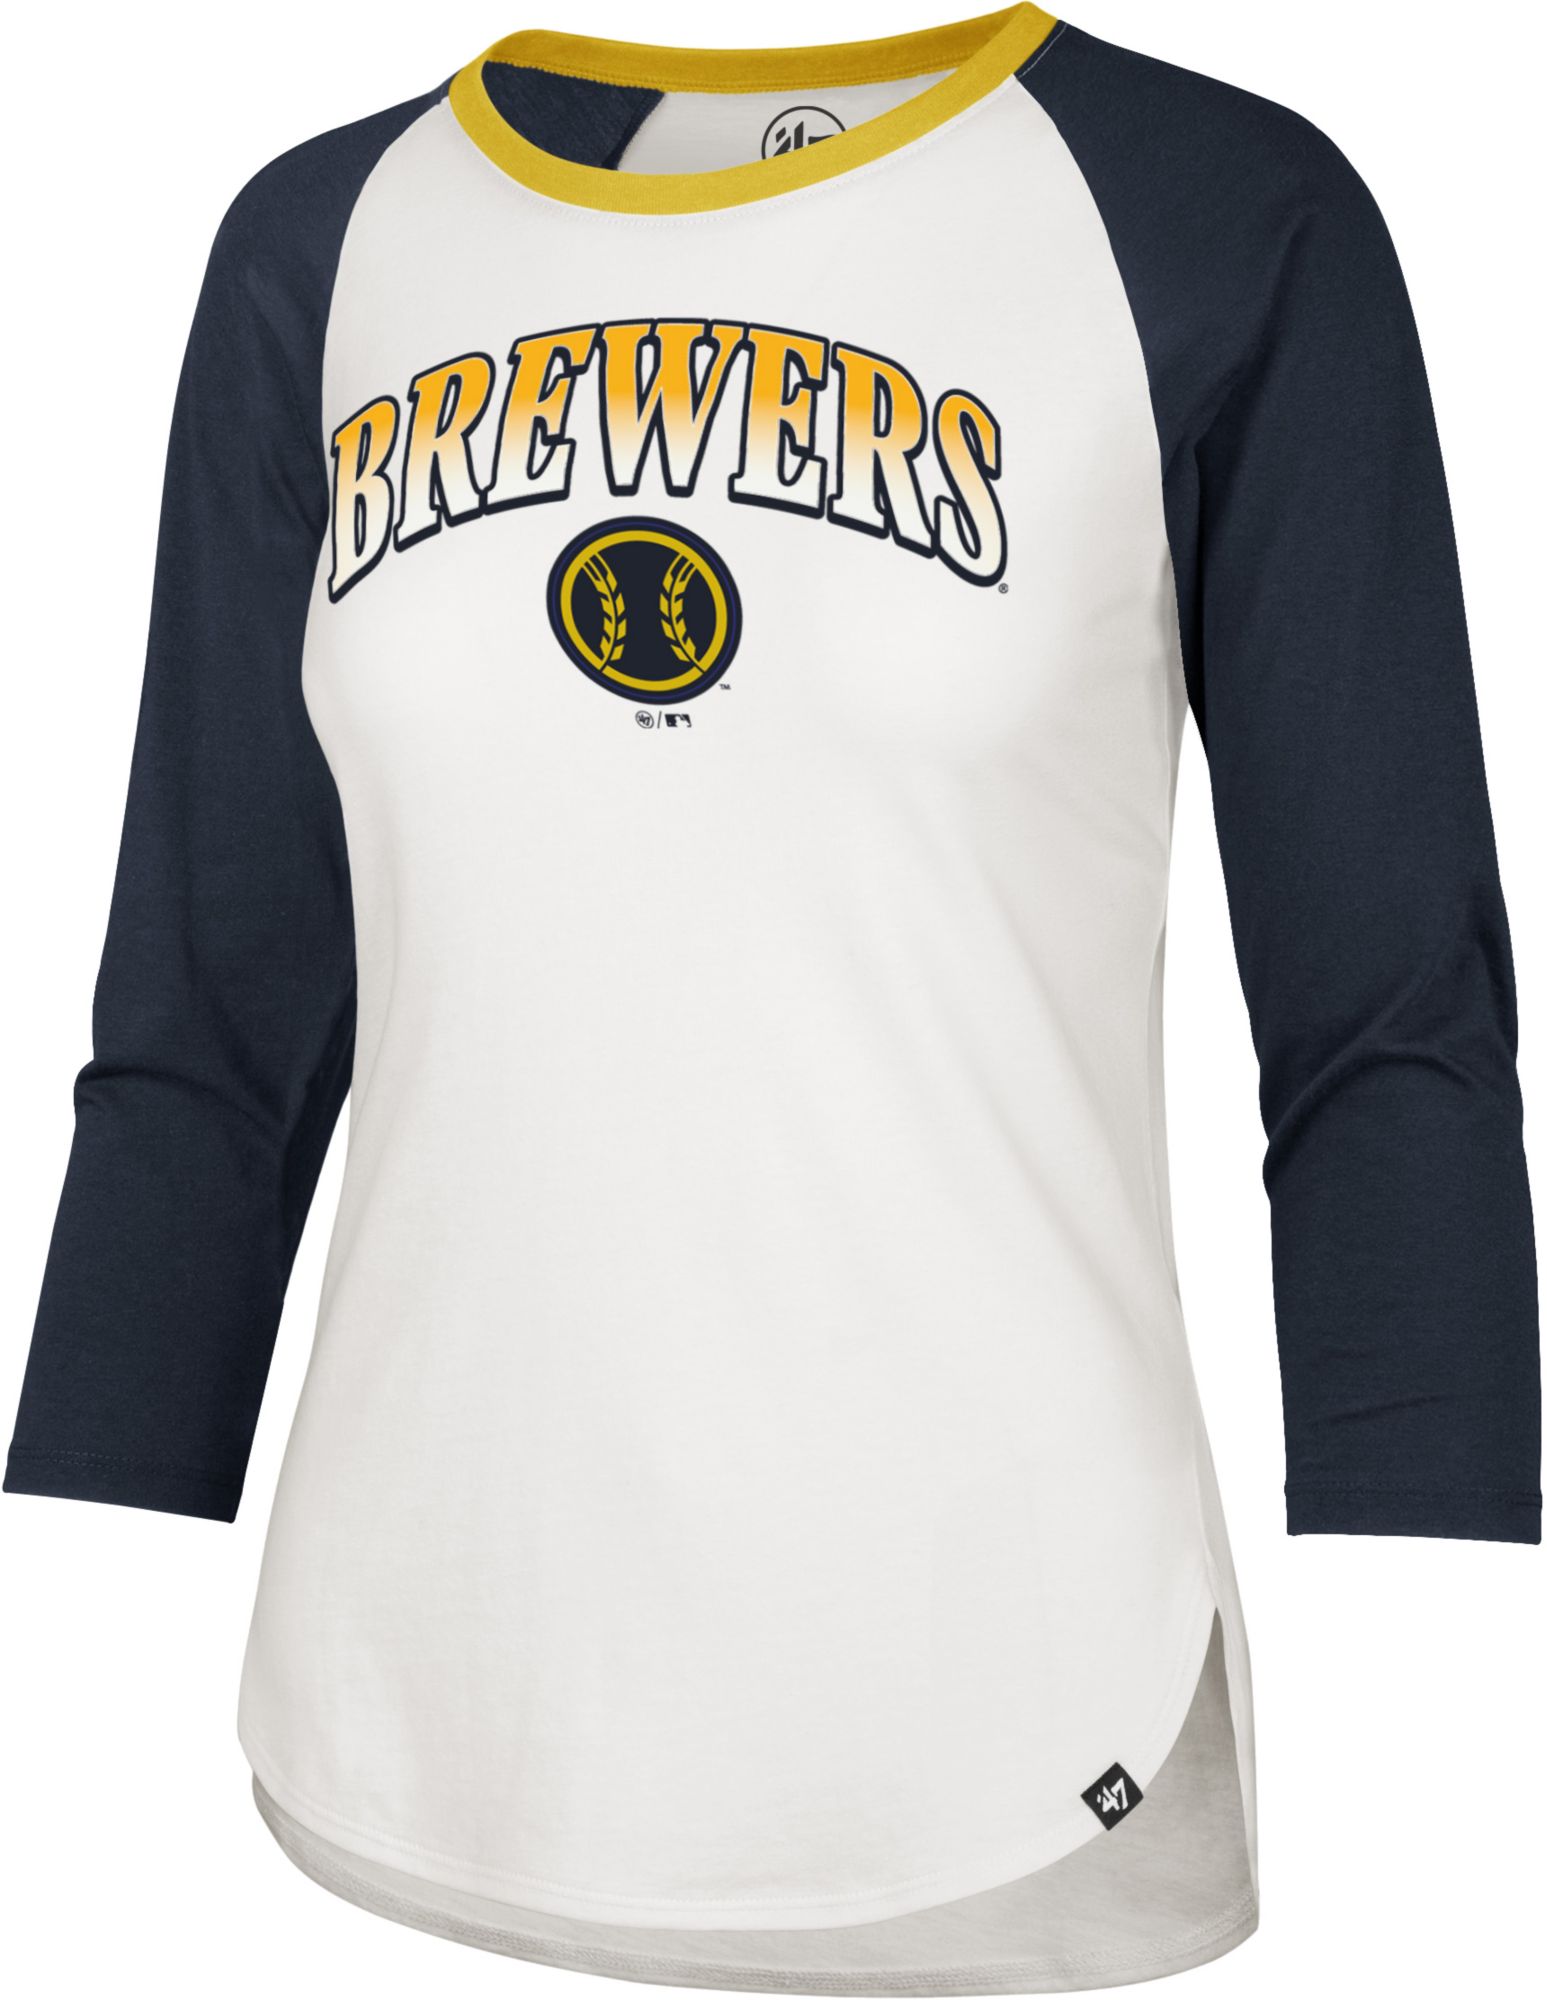 women's brewers jersey